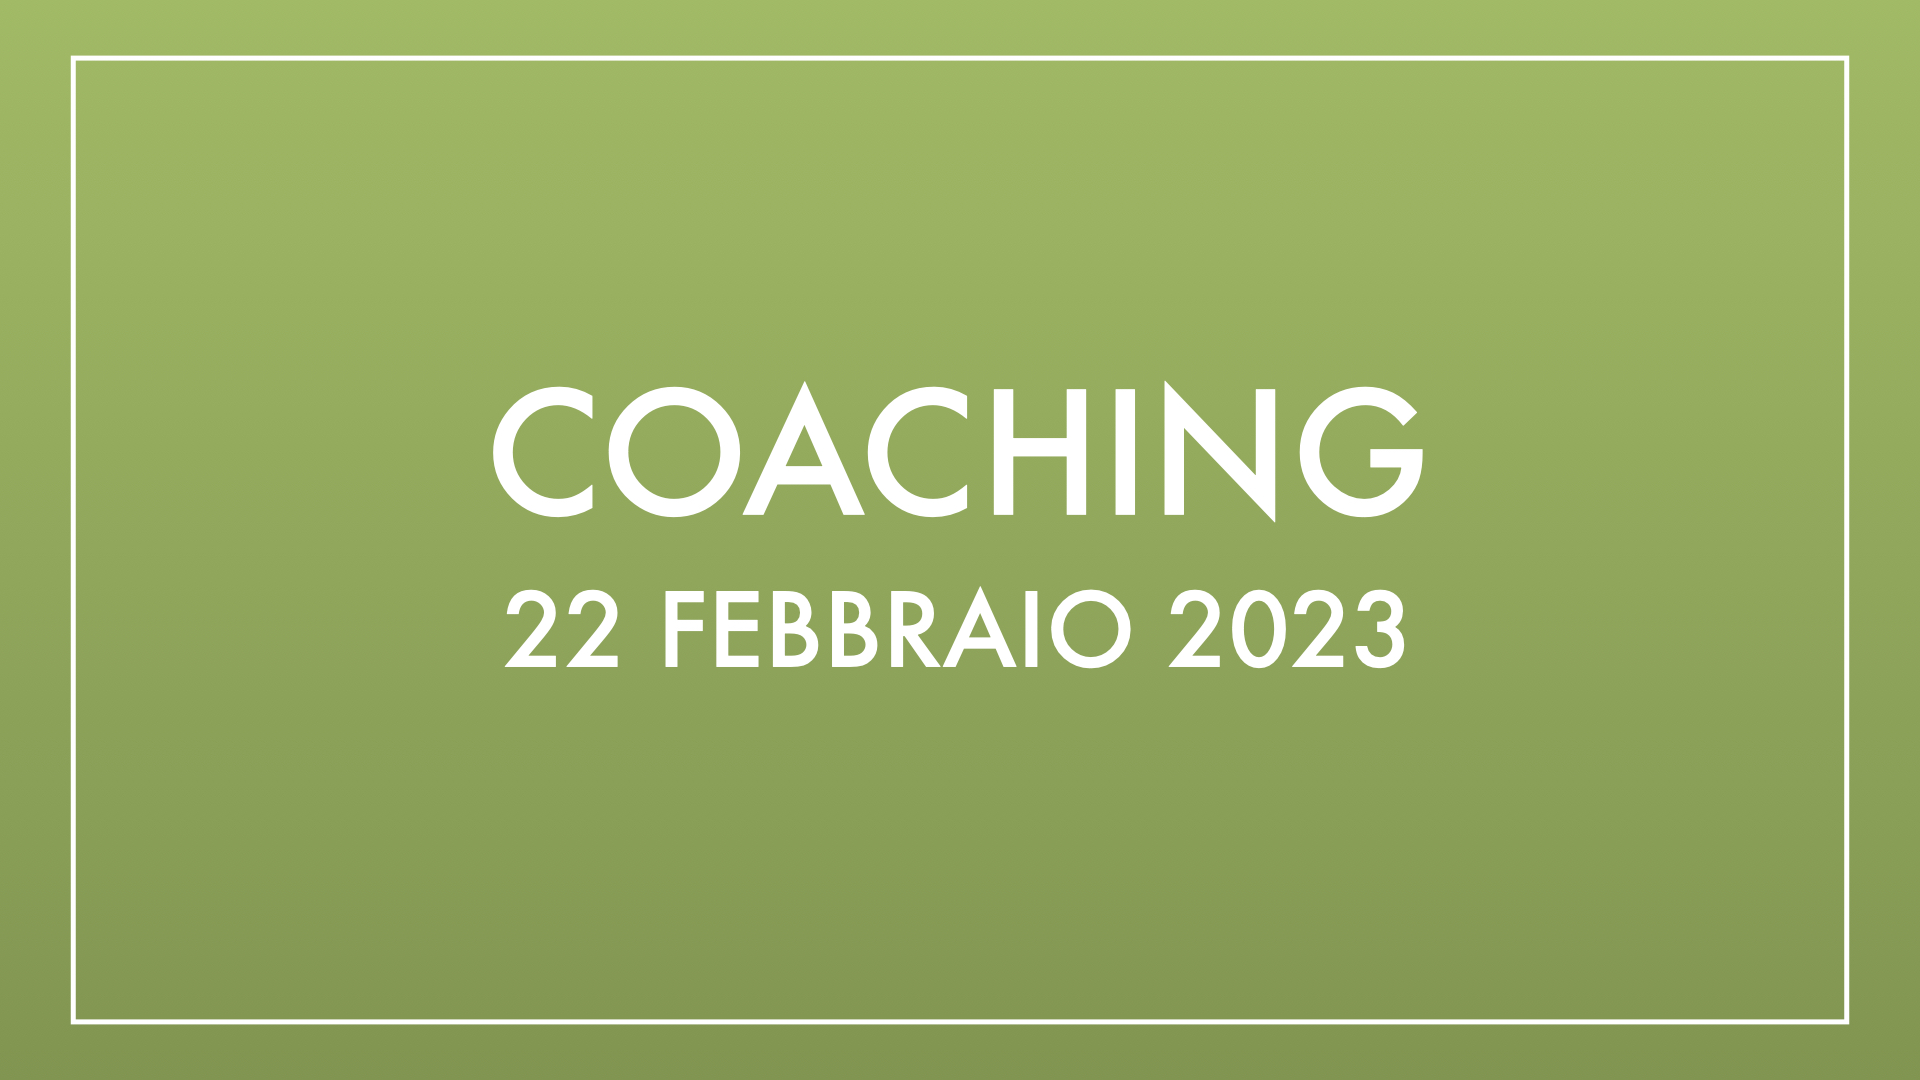 Coaching 22 febbraio 2023